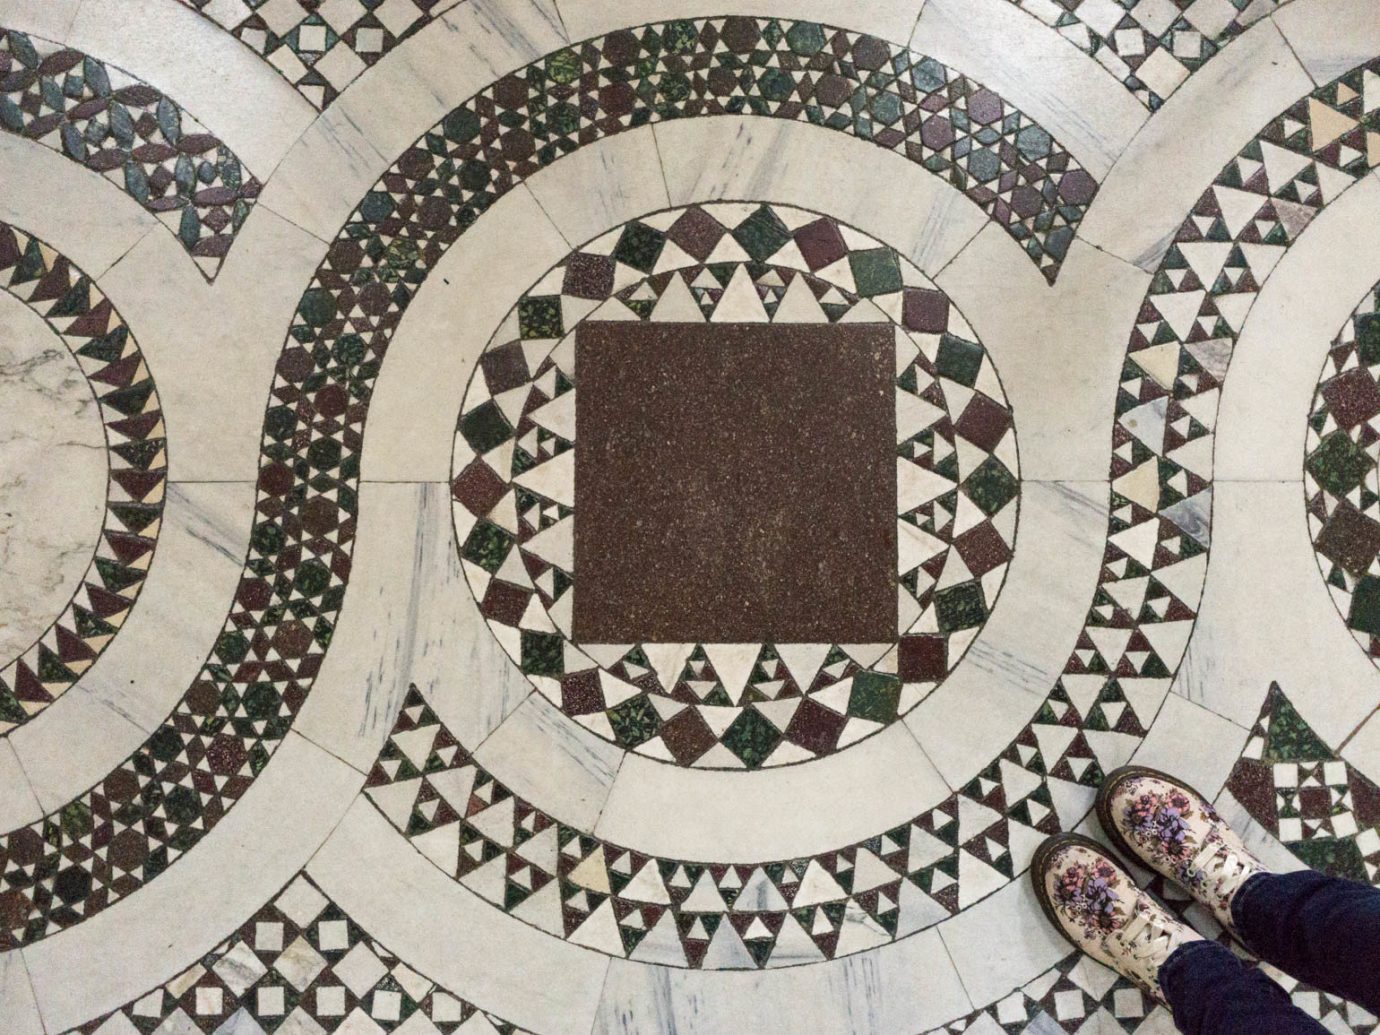 Trip Ideas textile material pattern flooring quilt mosaic art bedclothes arch